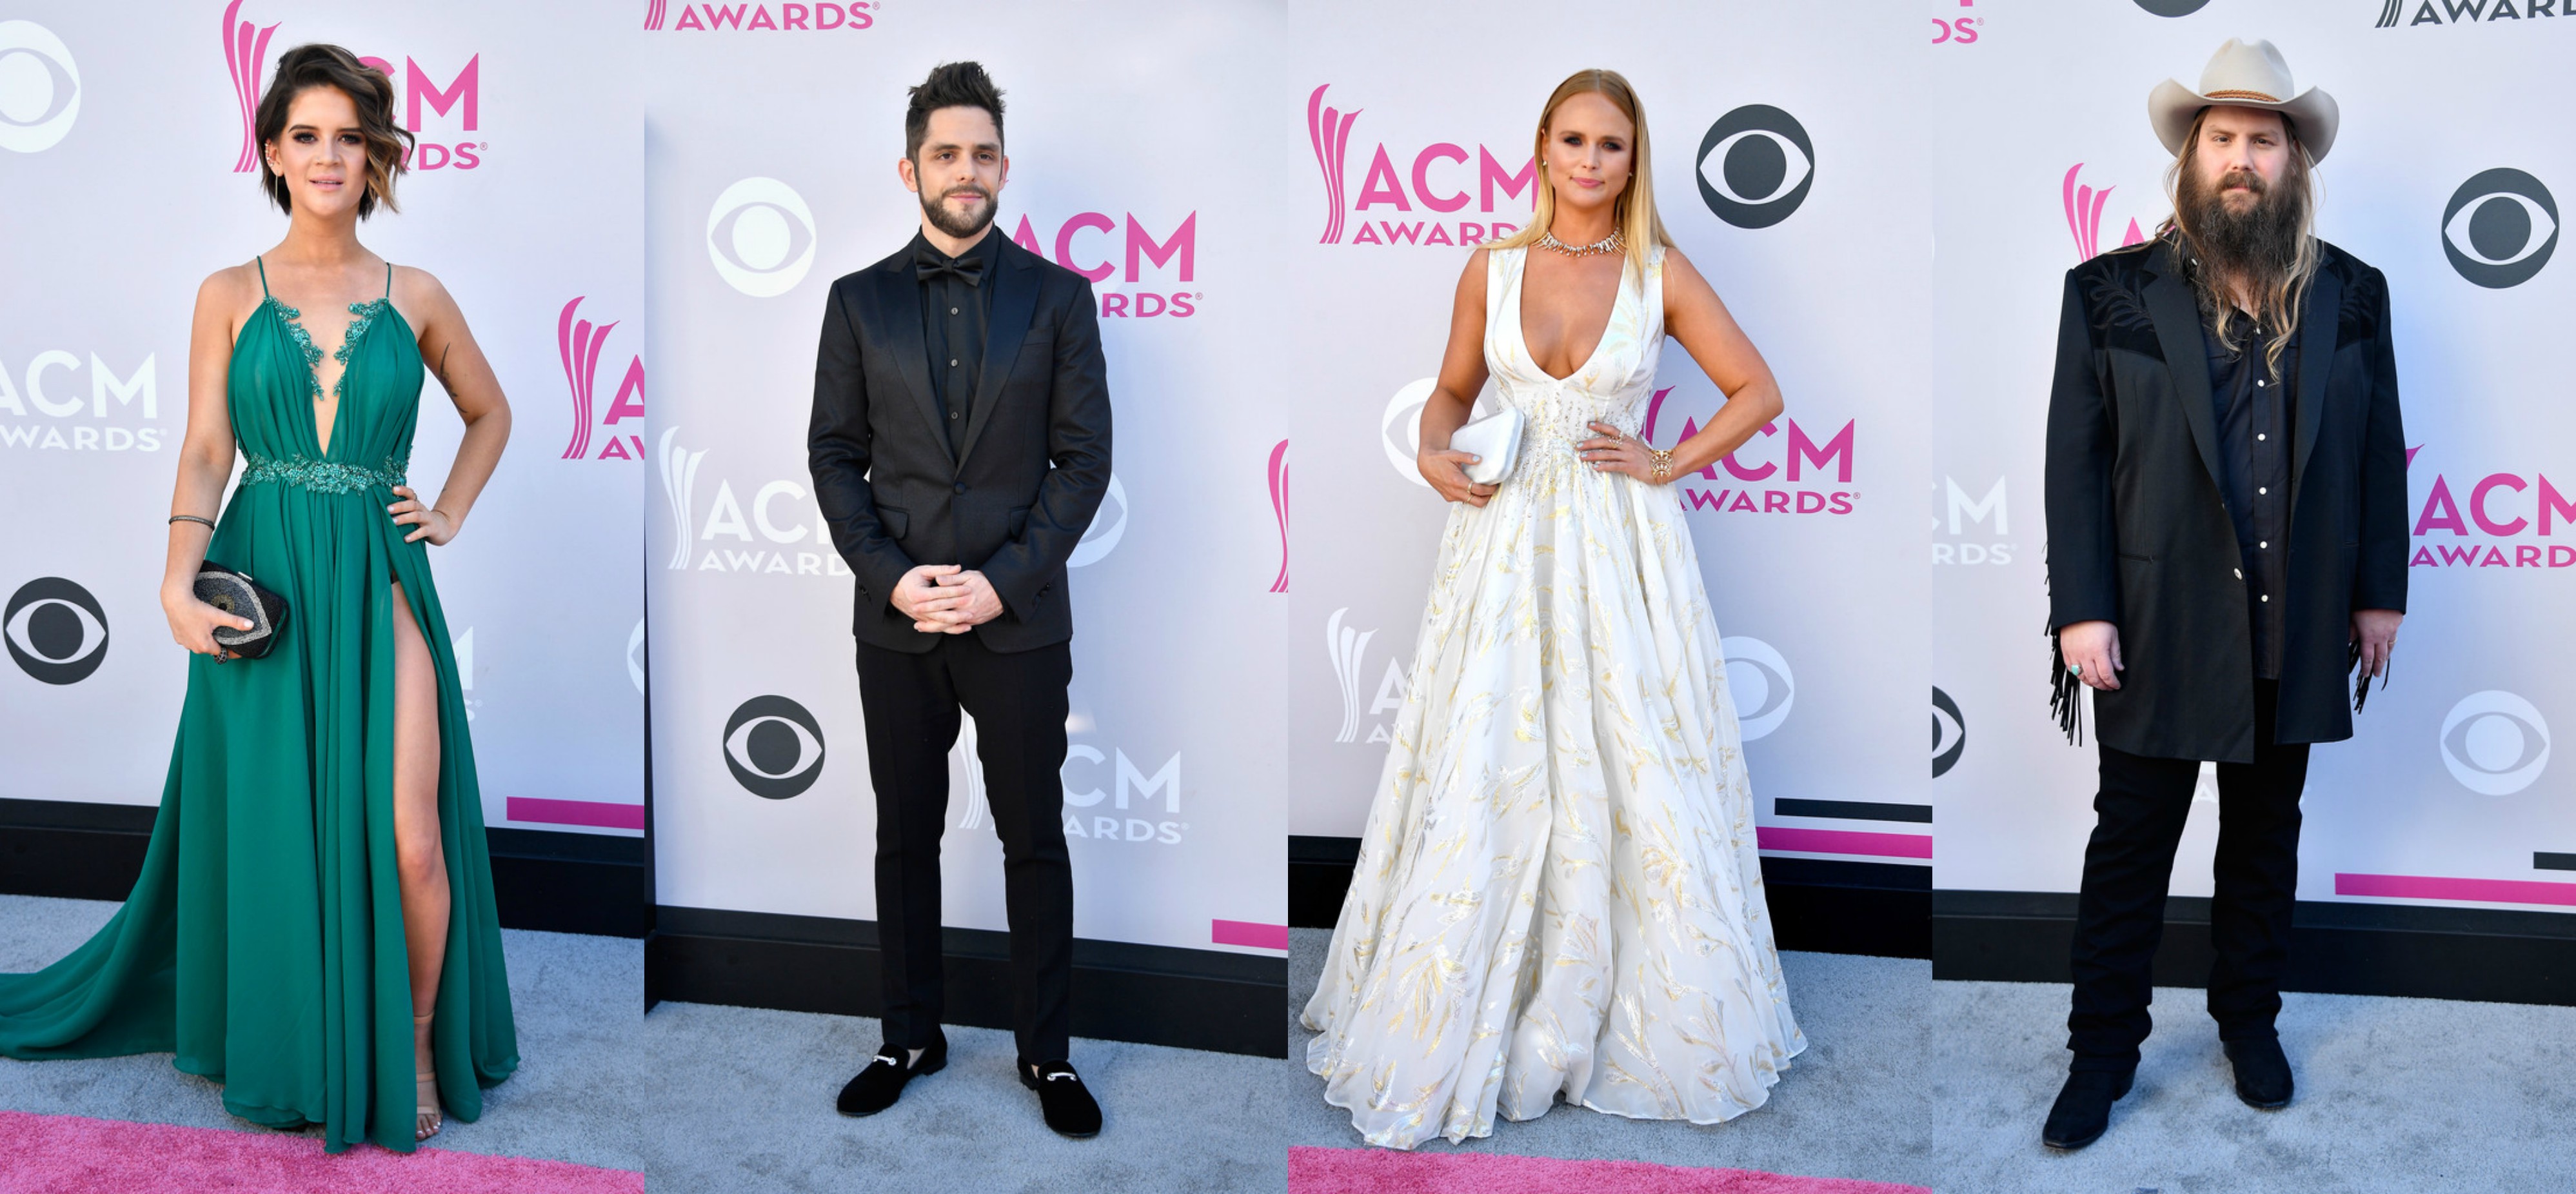 Chris Stapleton, Thomas Rhett, Miranda Lambert and Maren Morris Among Nominees for 53rd Academy of Country Music Awards